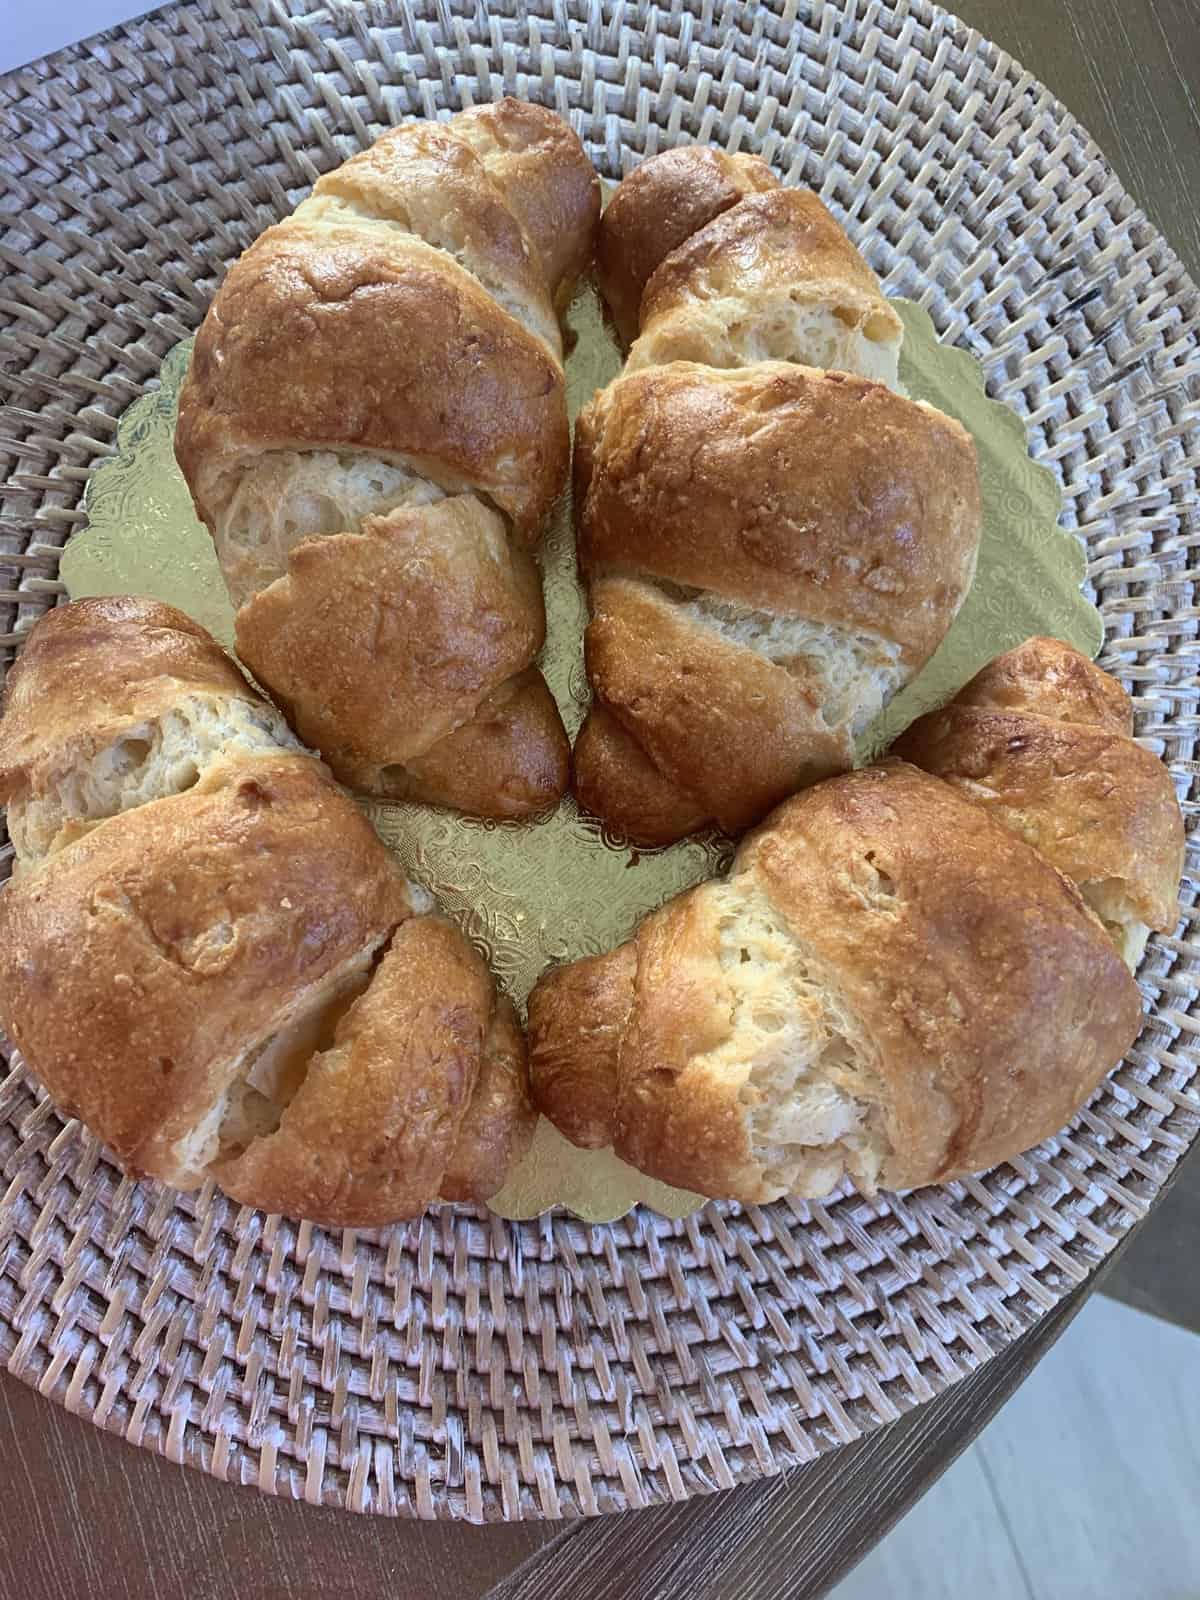 gluten-free croissants from La Mariposa Bakery